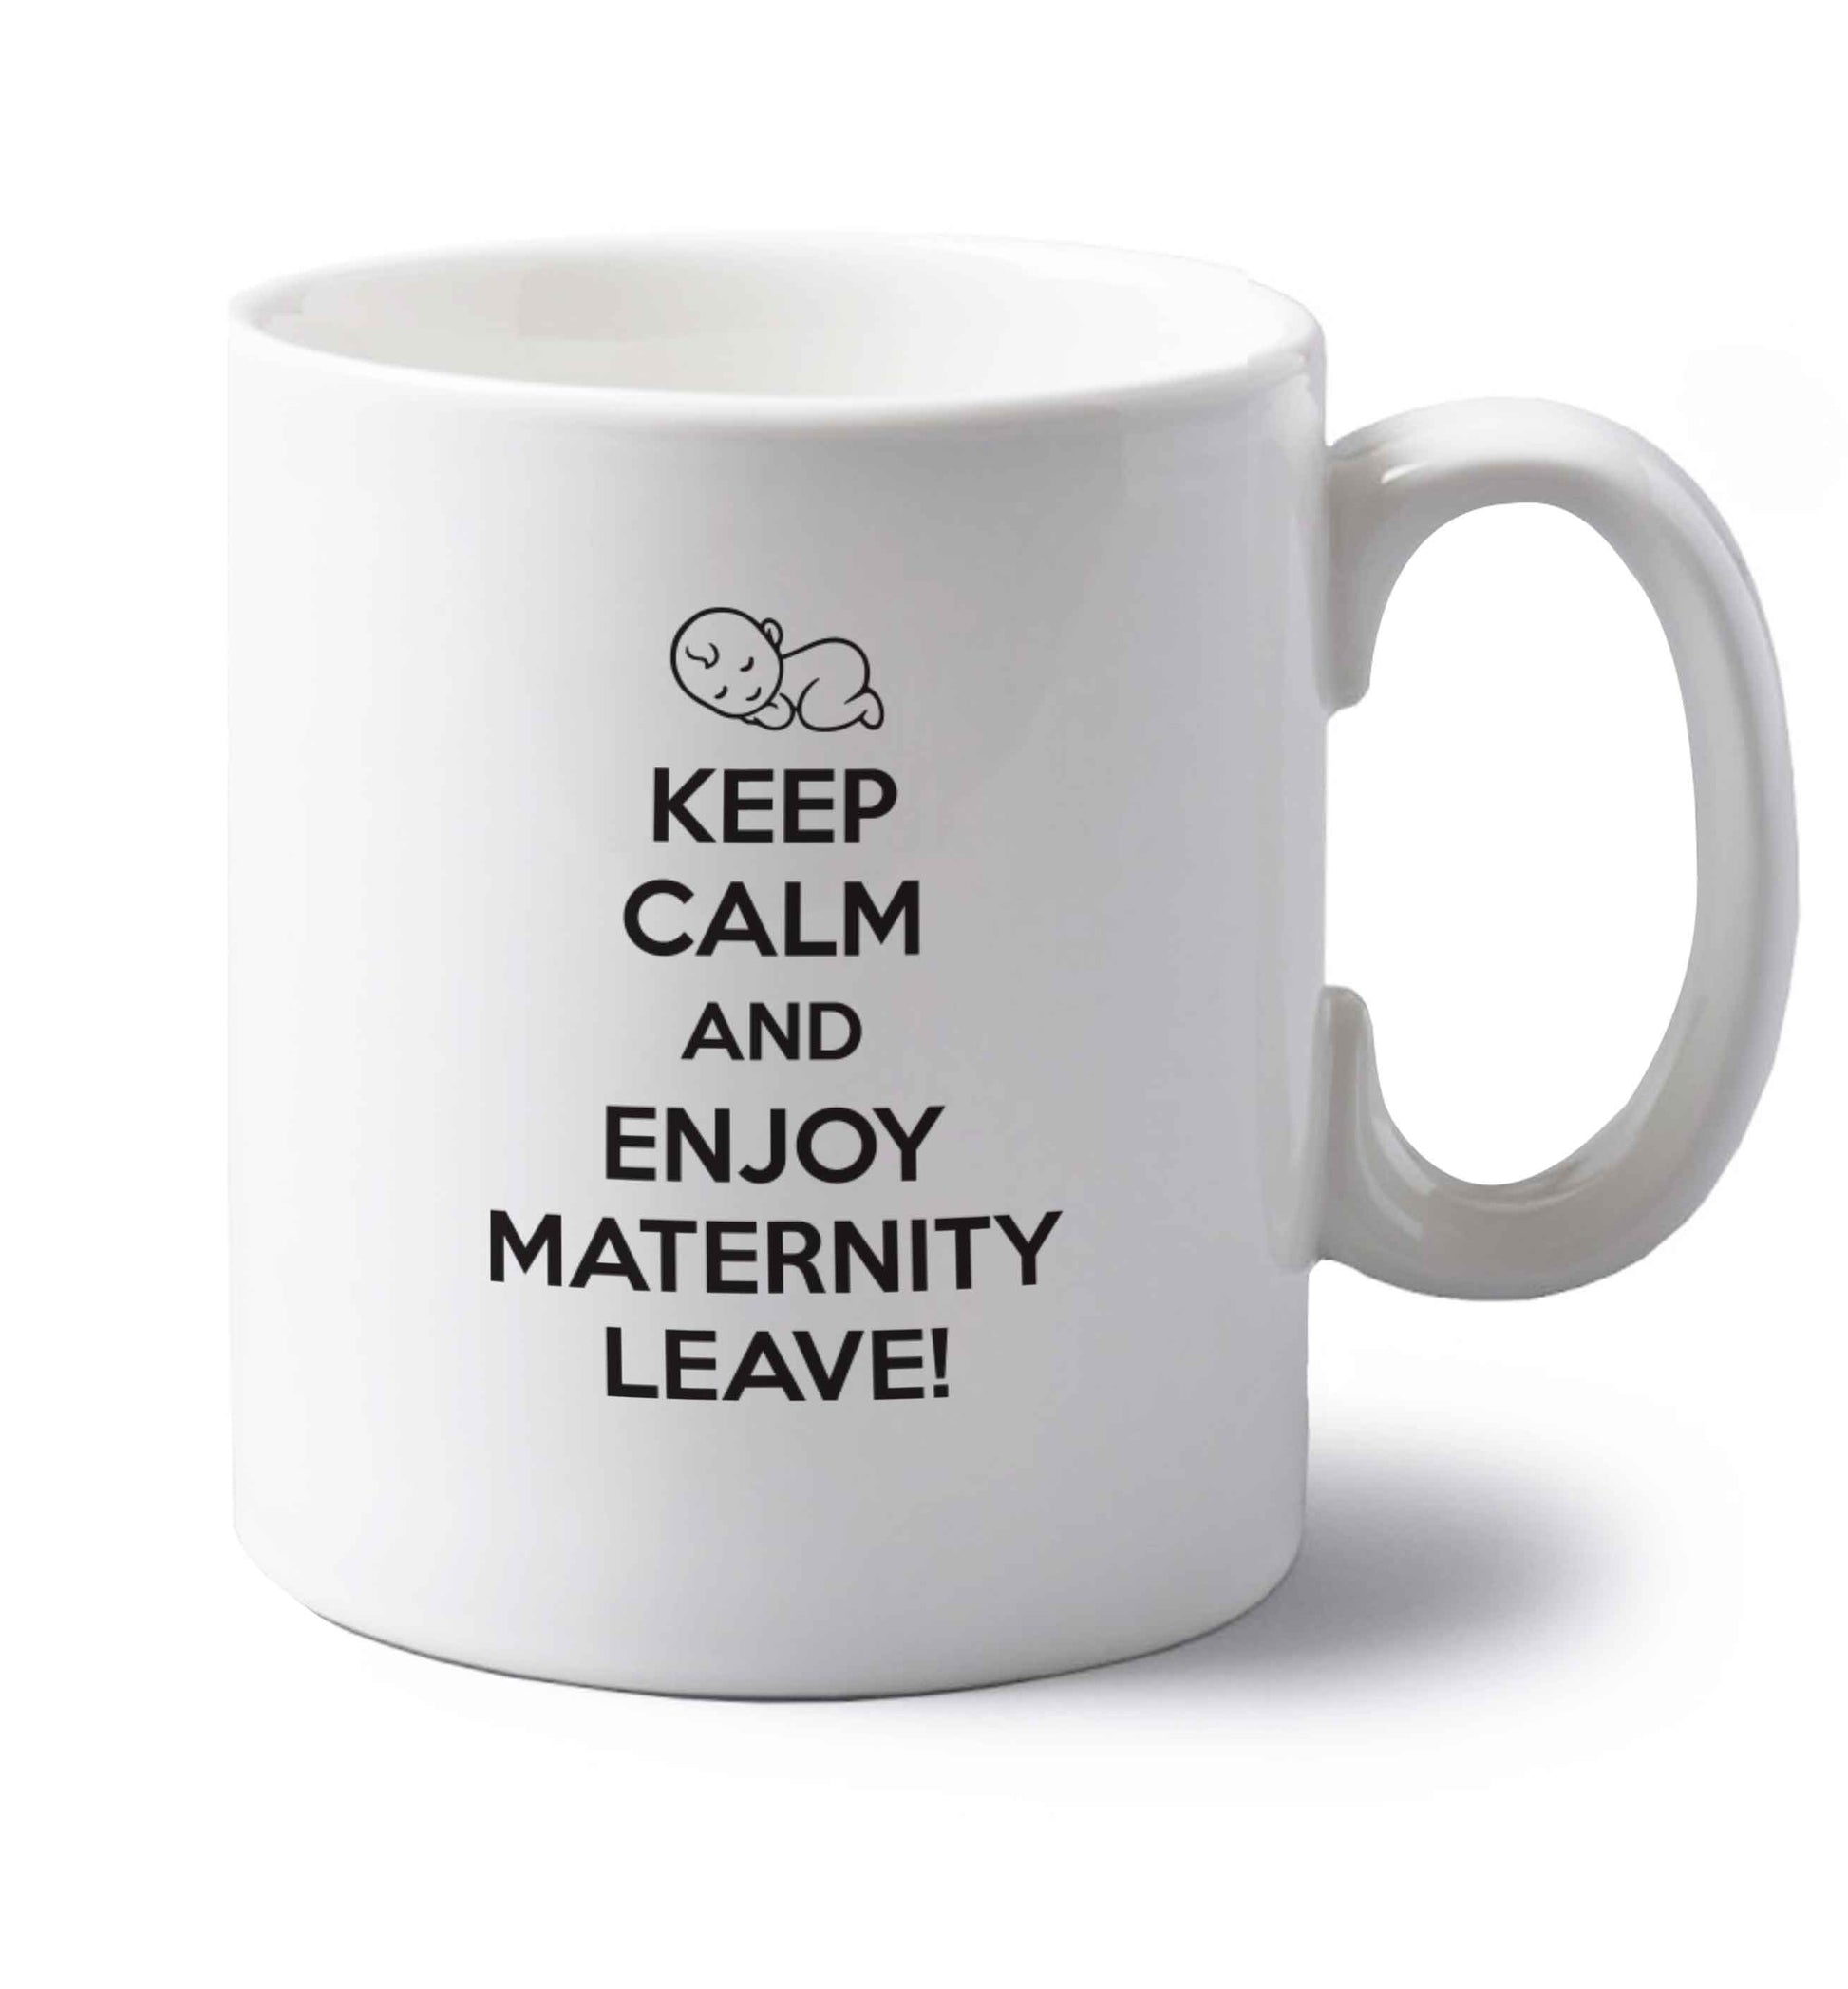 Keep calm and enjoy maternity leave left handed white ceramic mug 